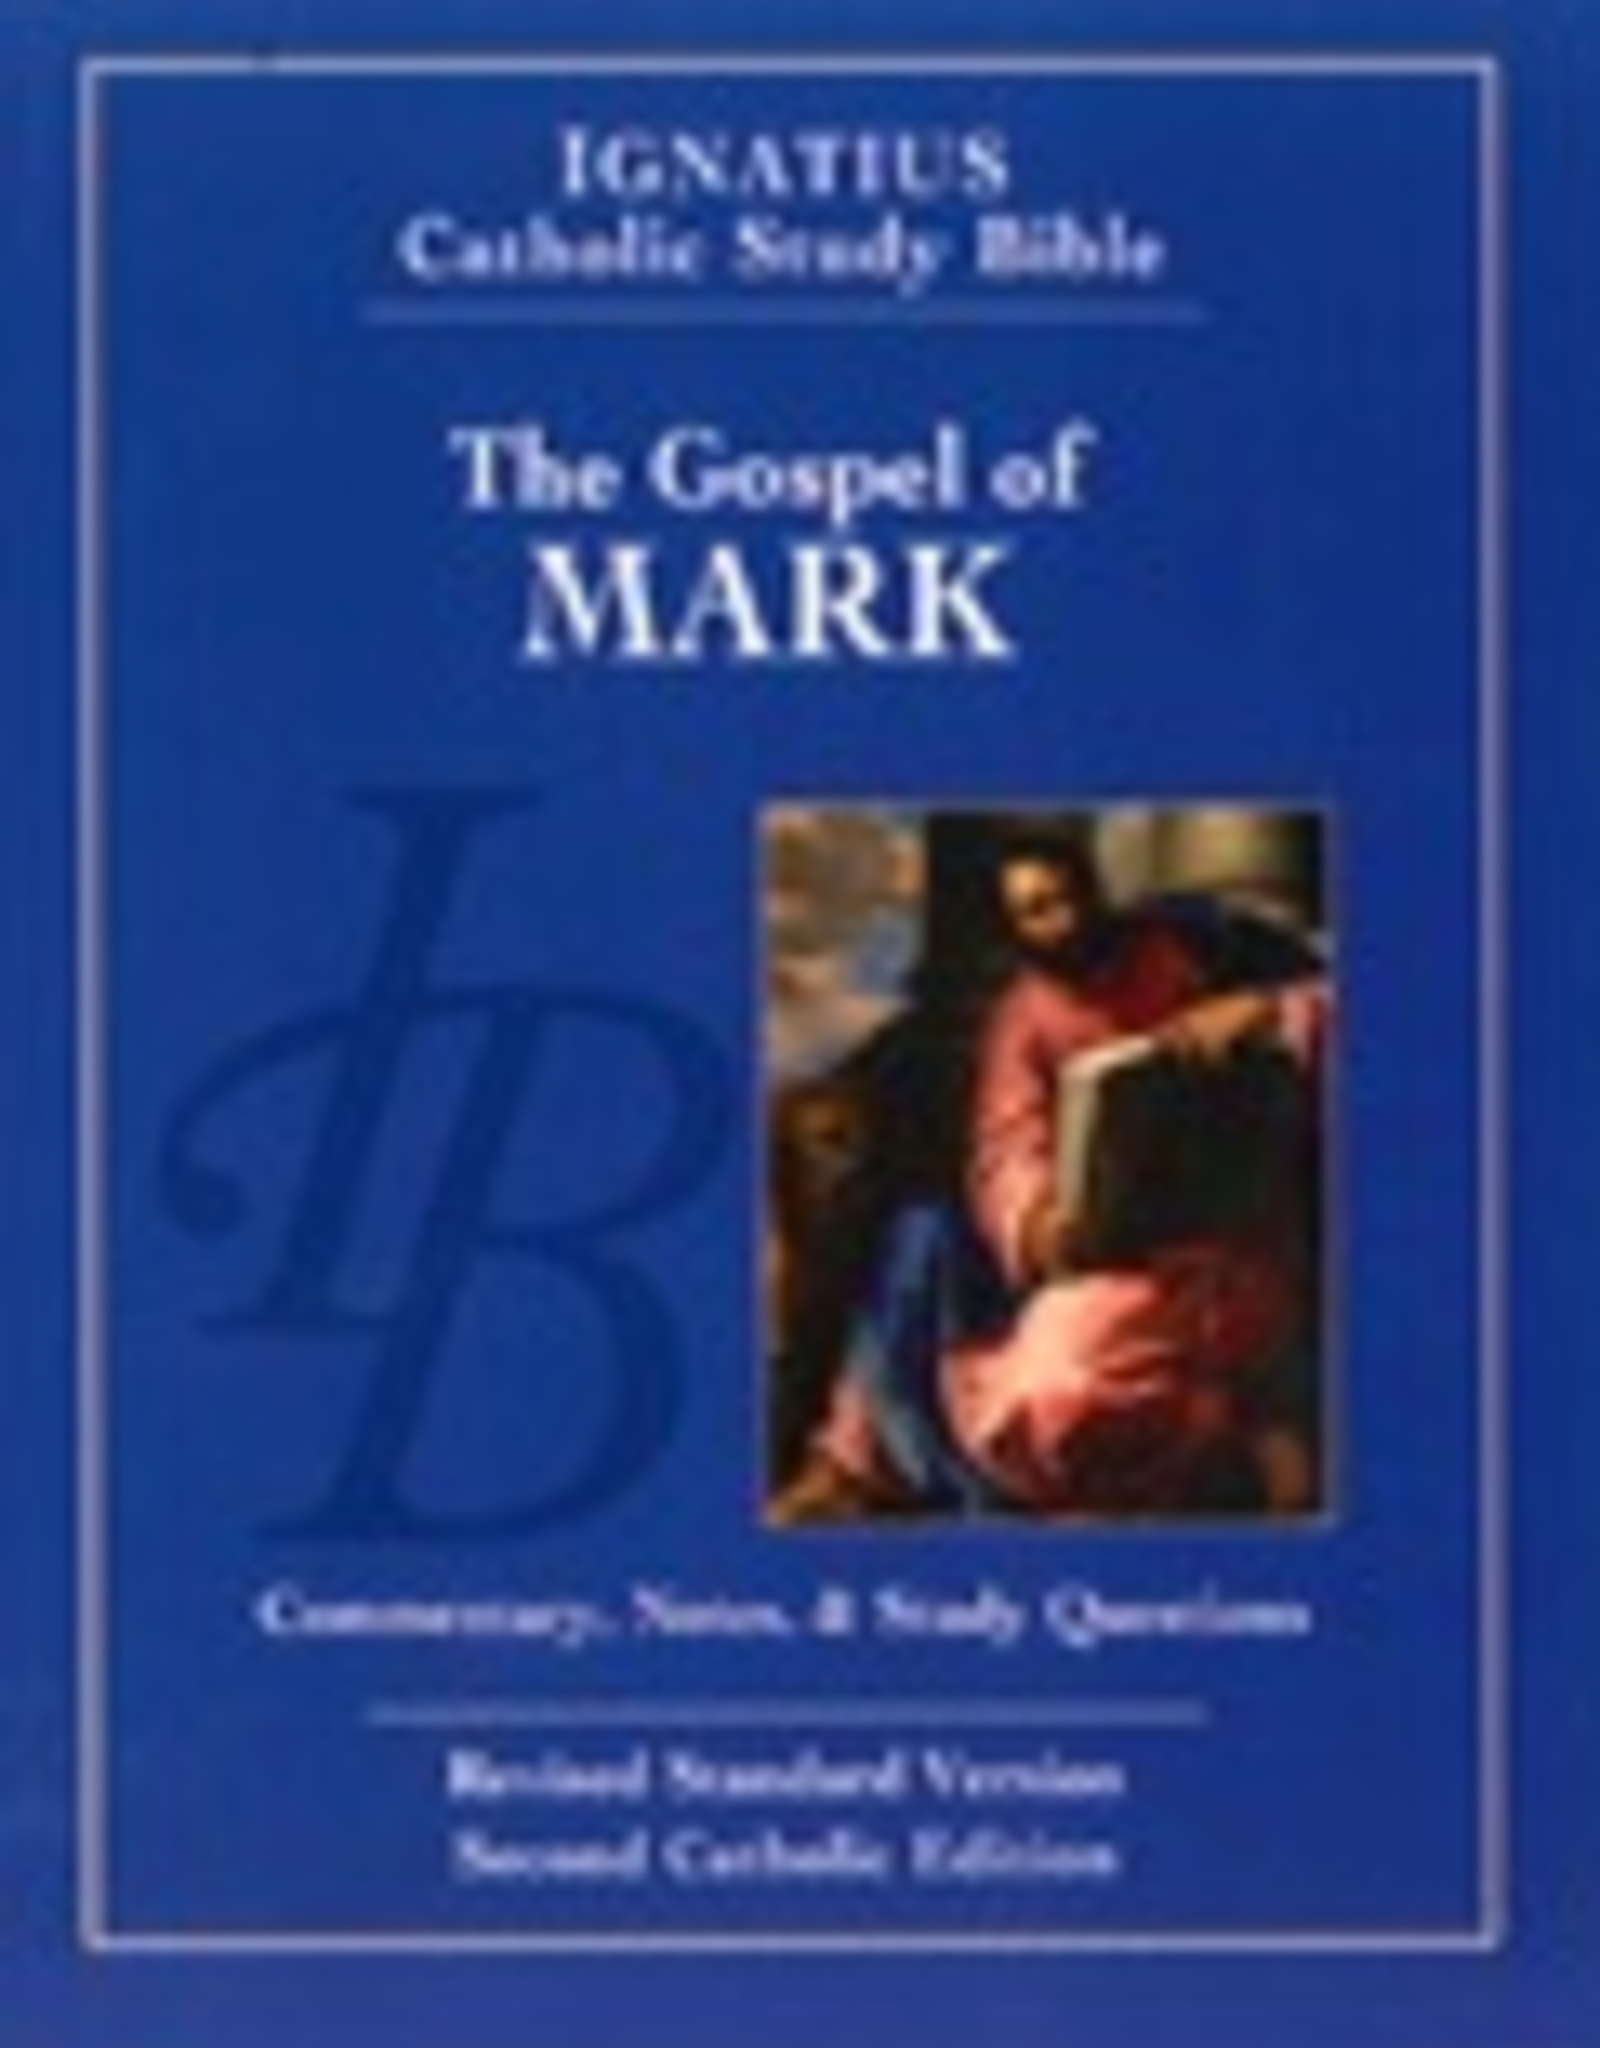 Ignatius Press The Gospel According to Mark (2nd ed.):  Ignatius Catholic Study Bible, by Scott Hahn and Curtis Mitch (paperback)